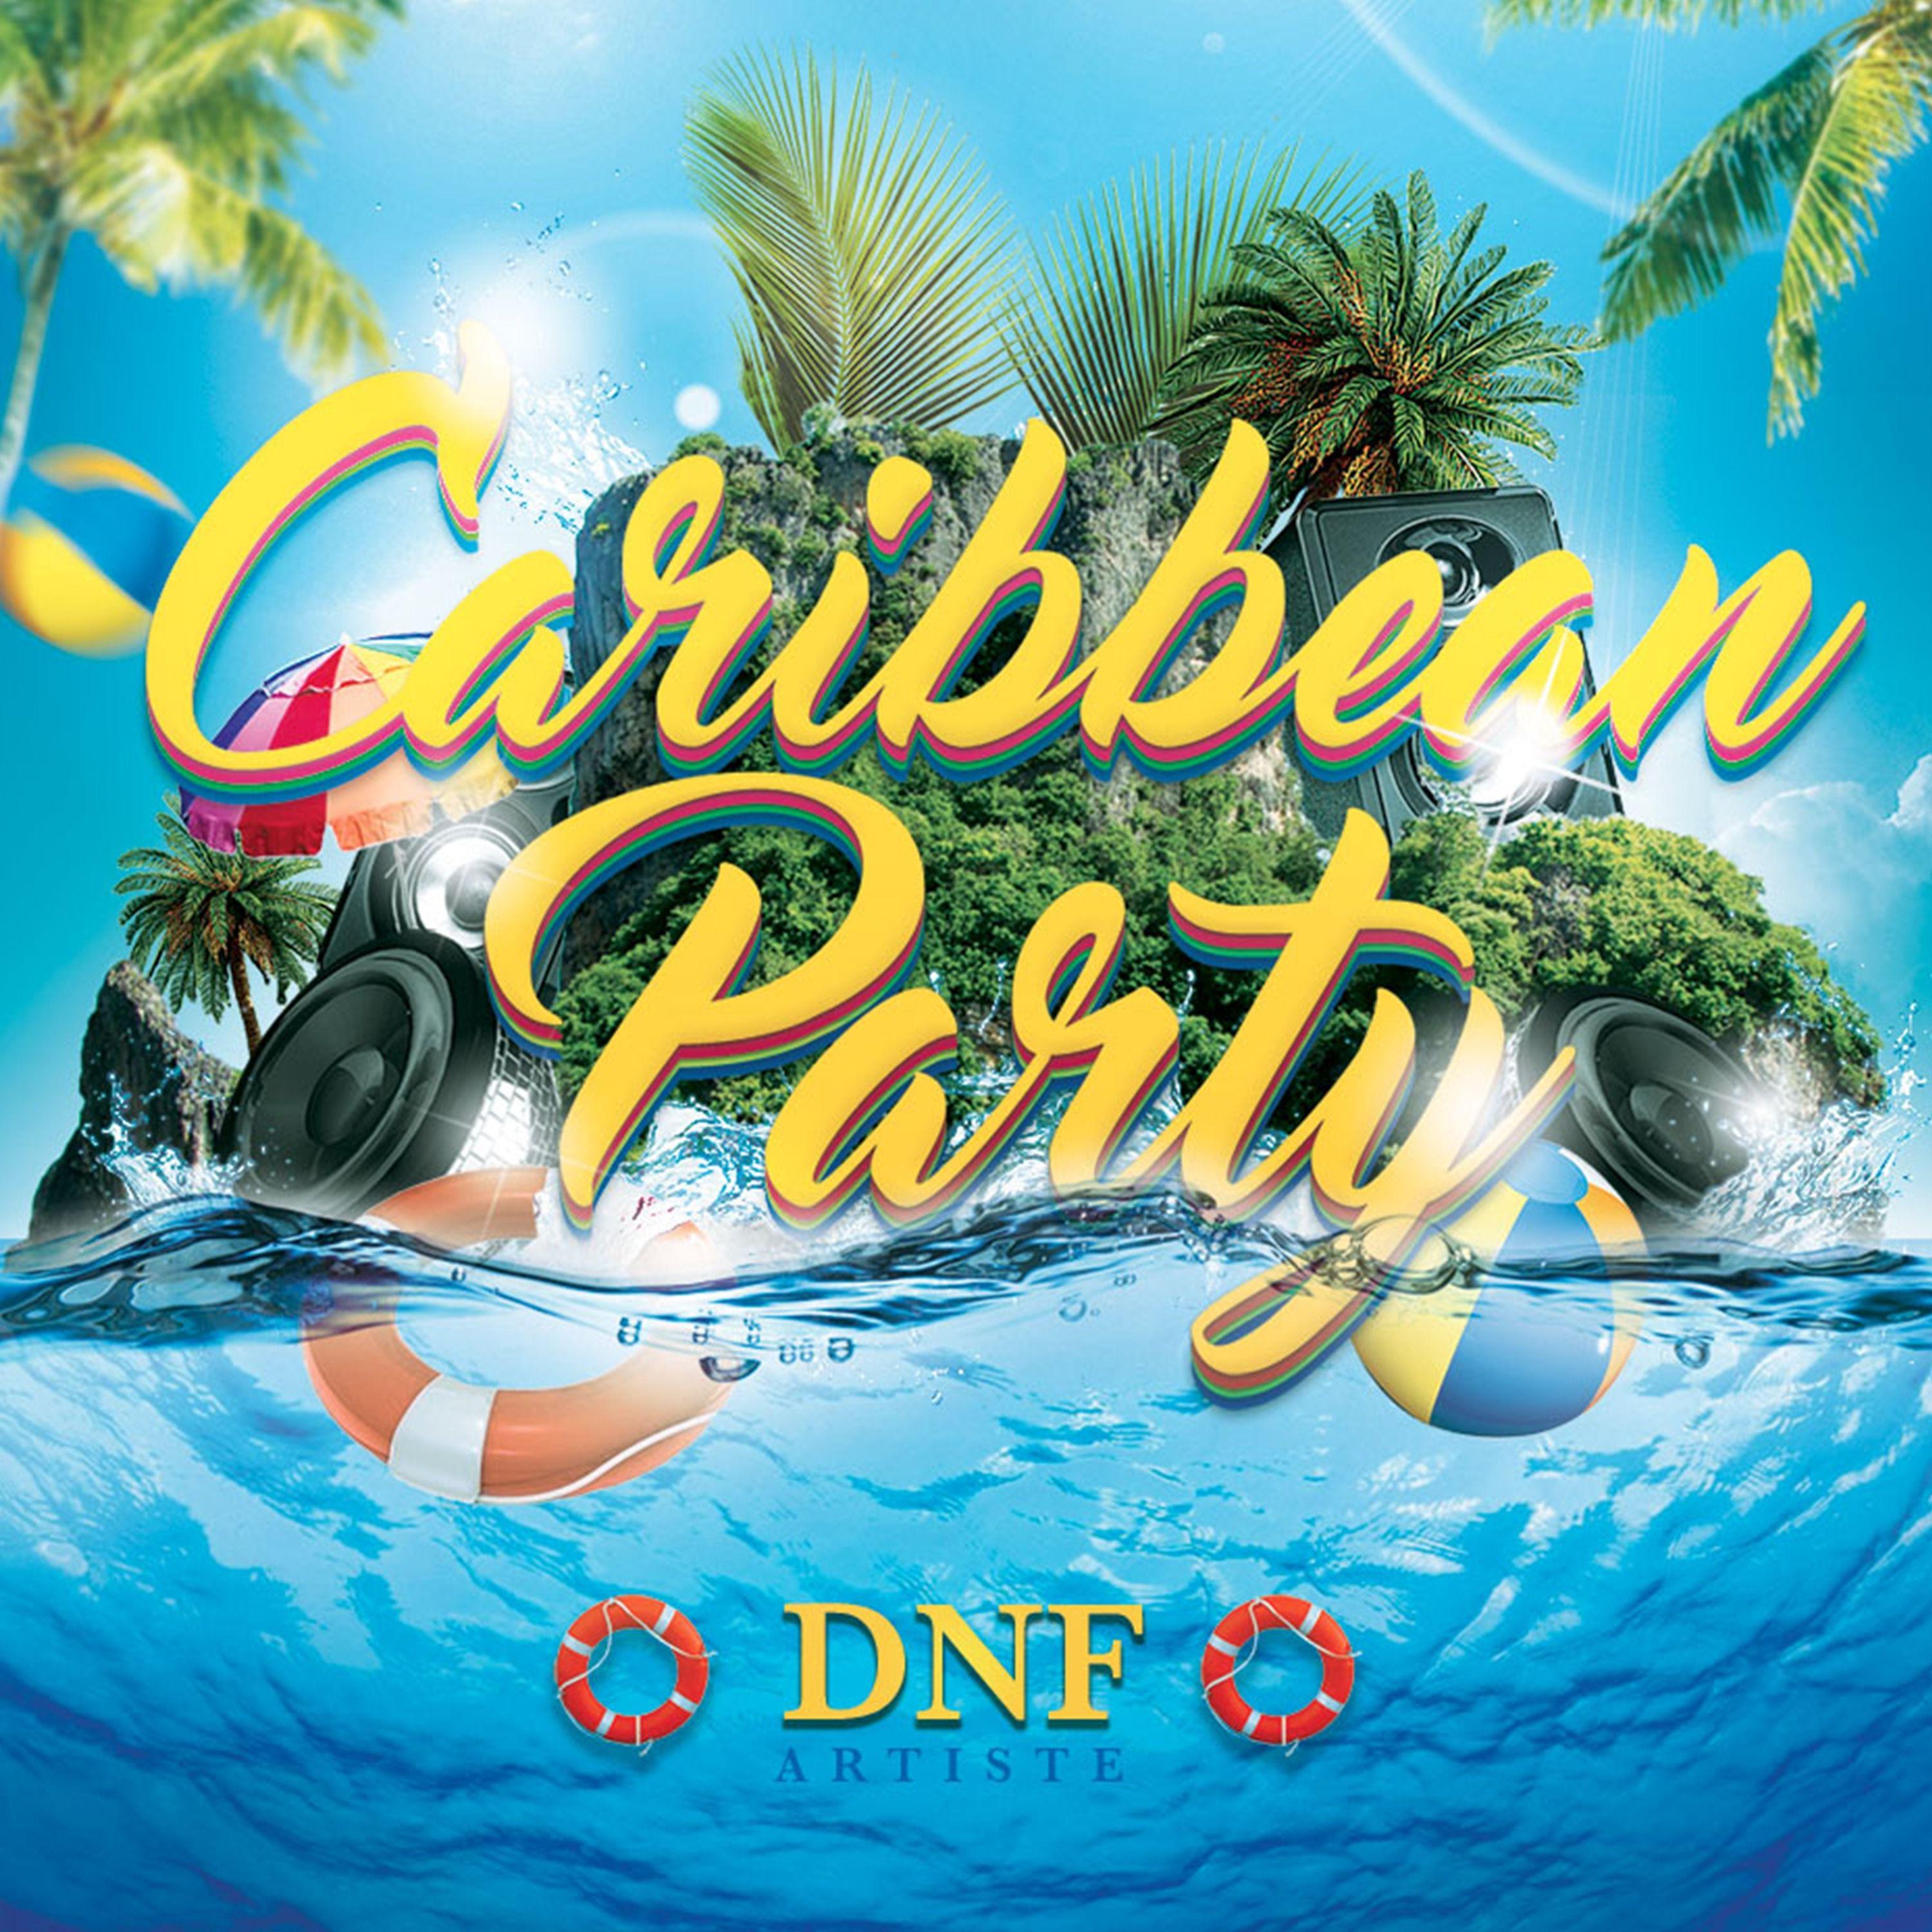 Caribbean Party